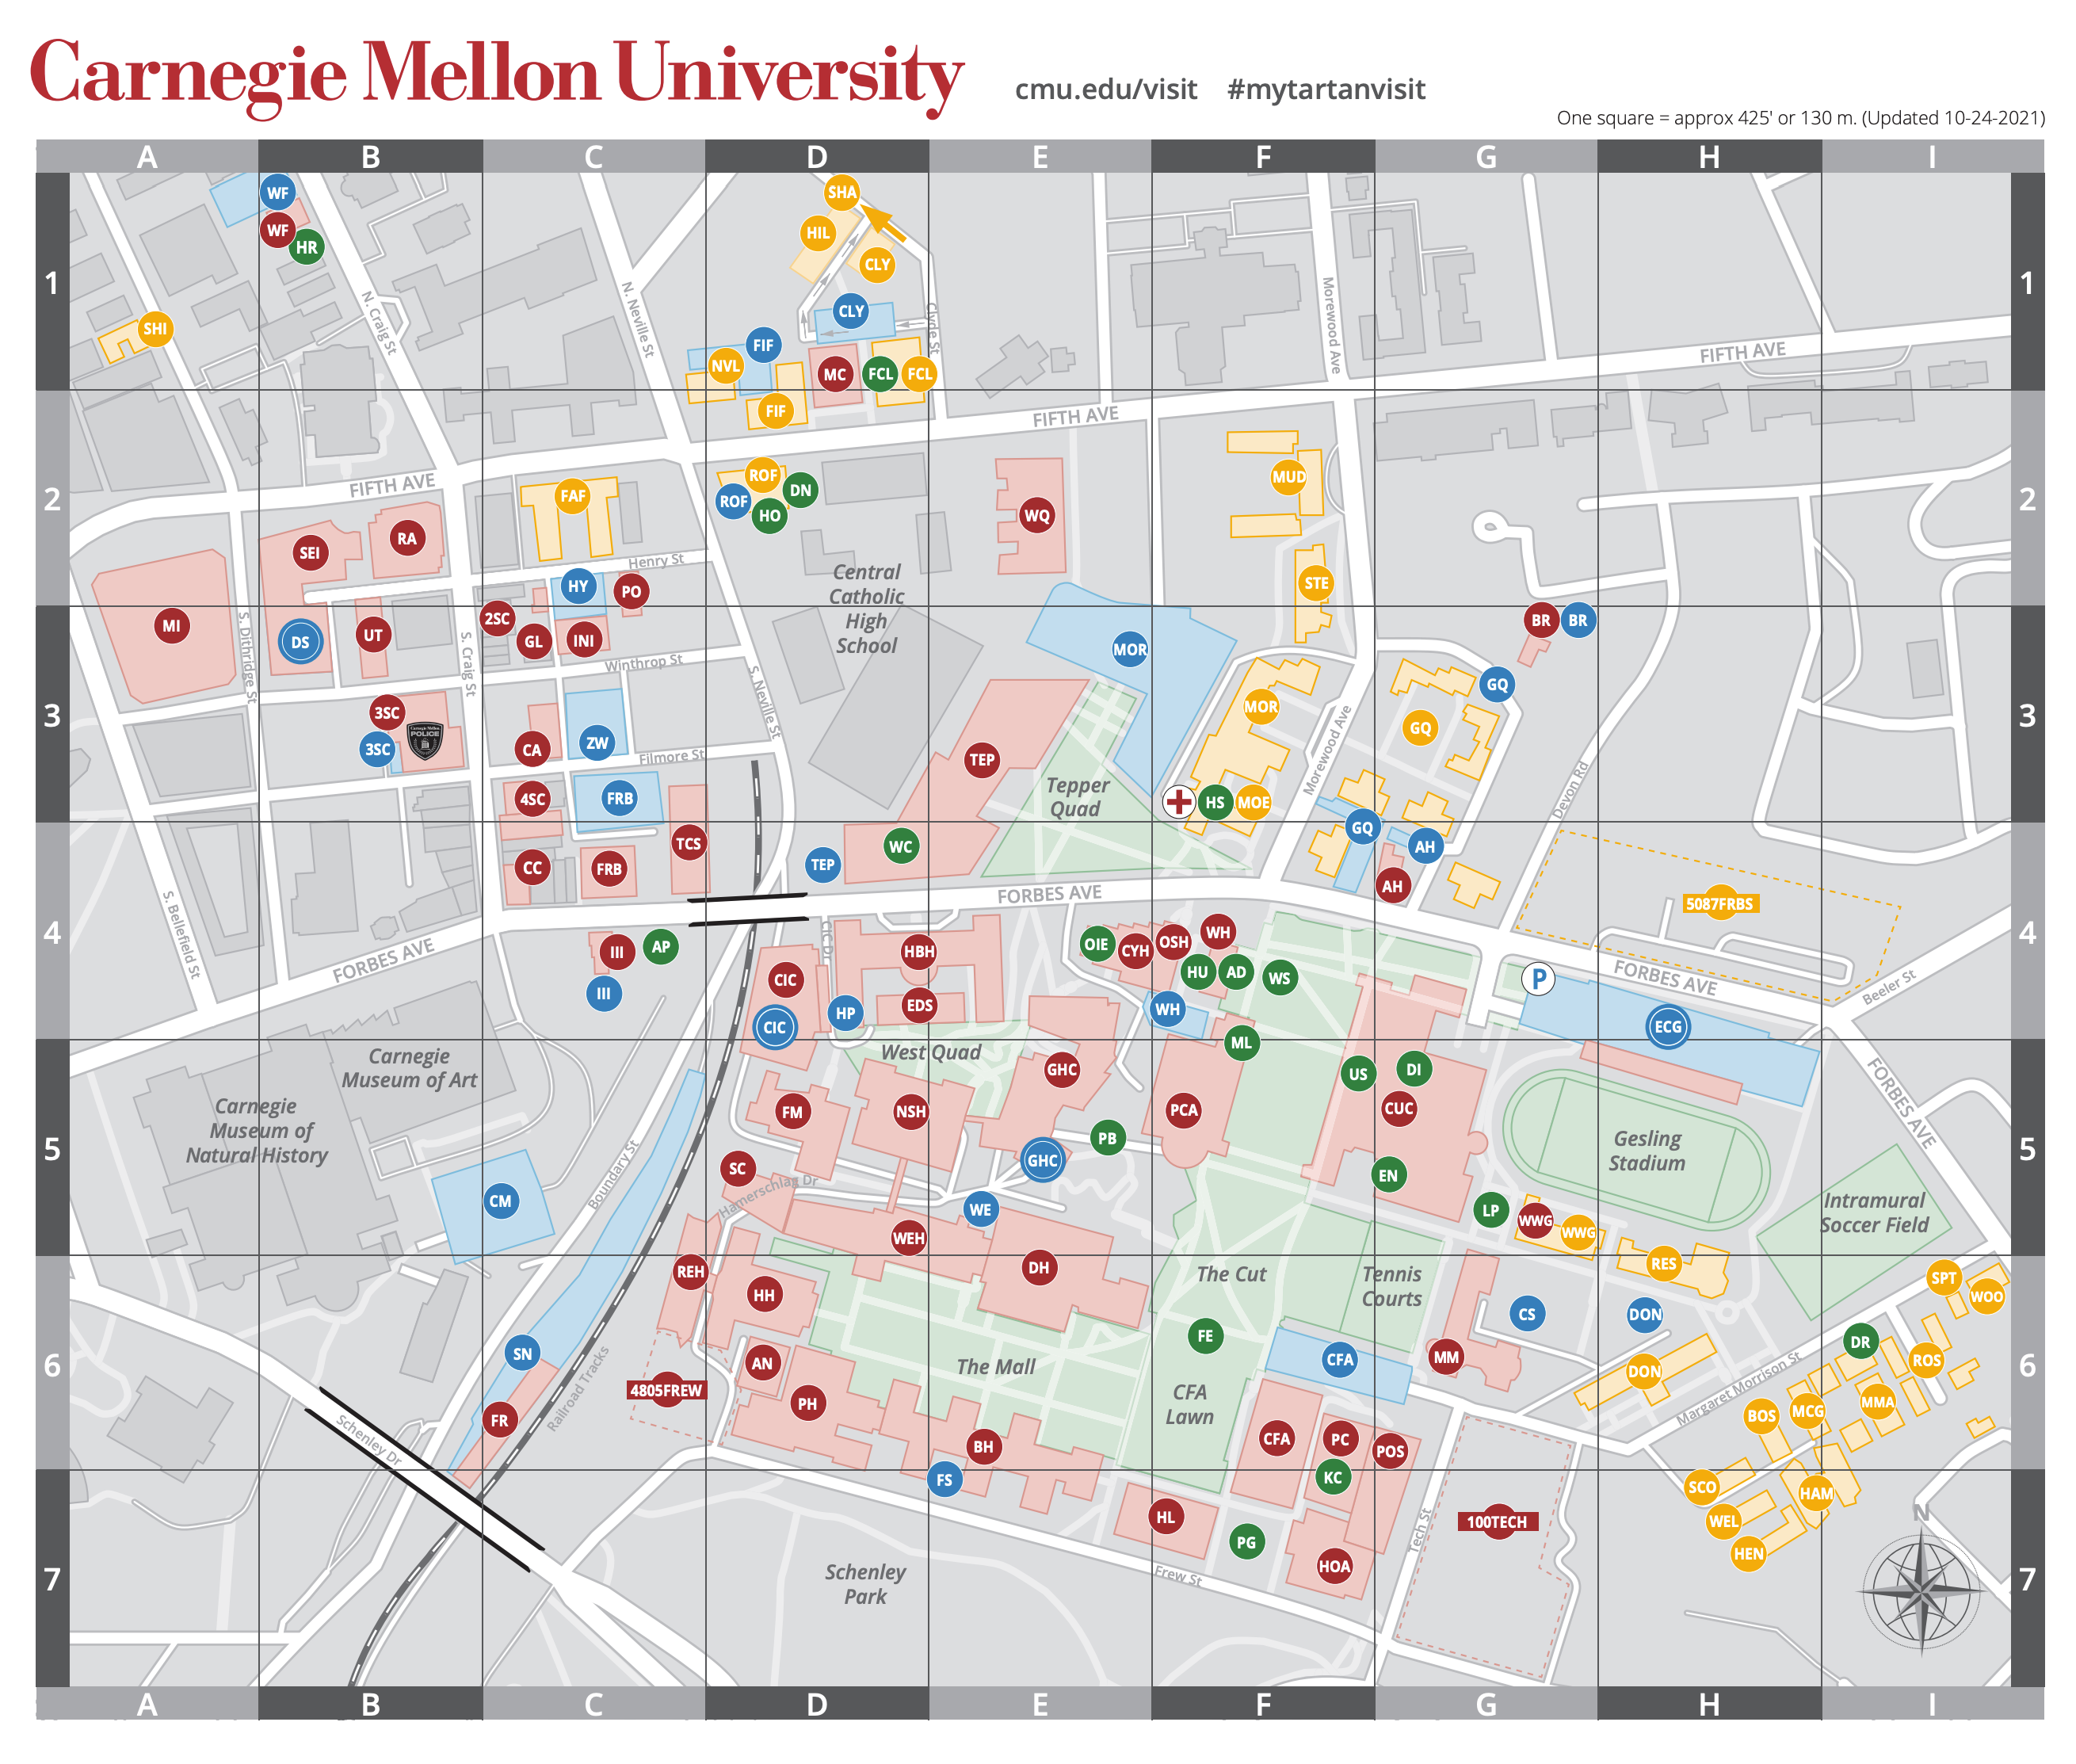 cmu campus map image